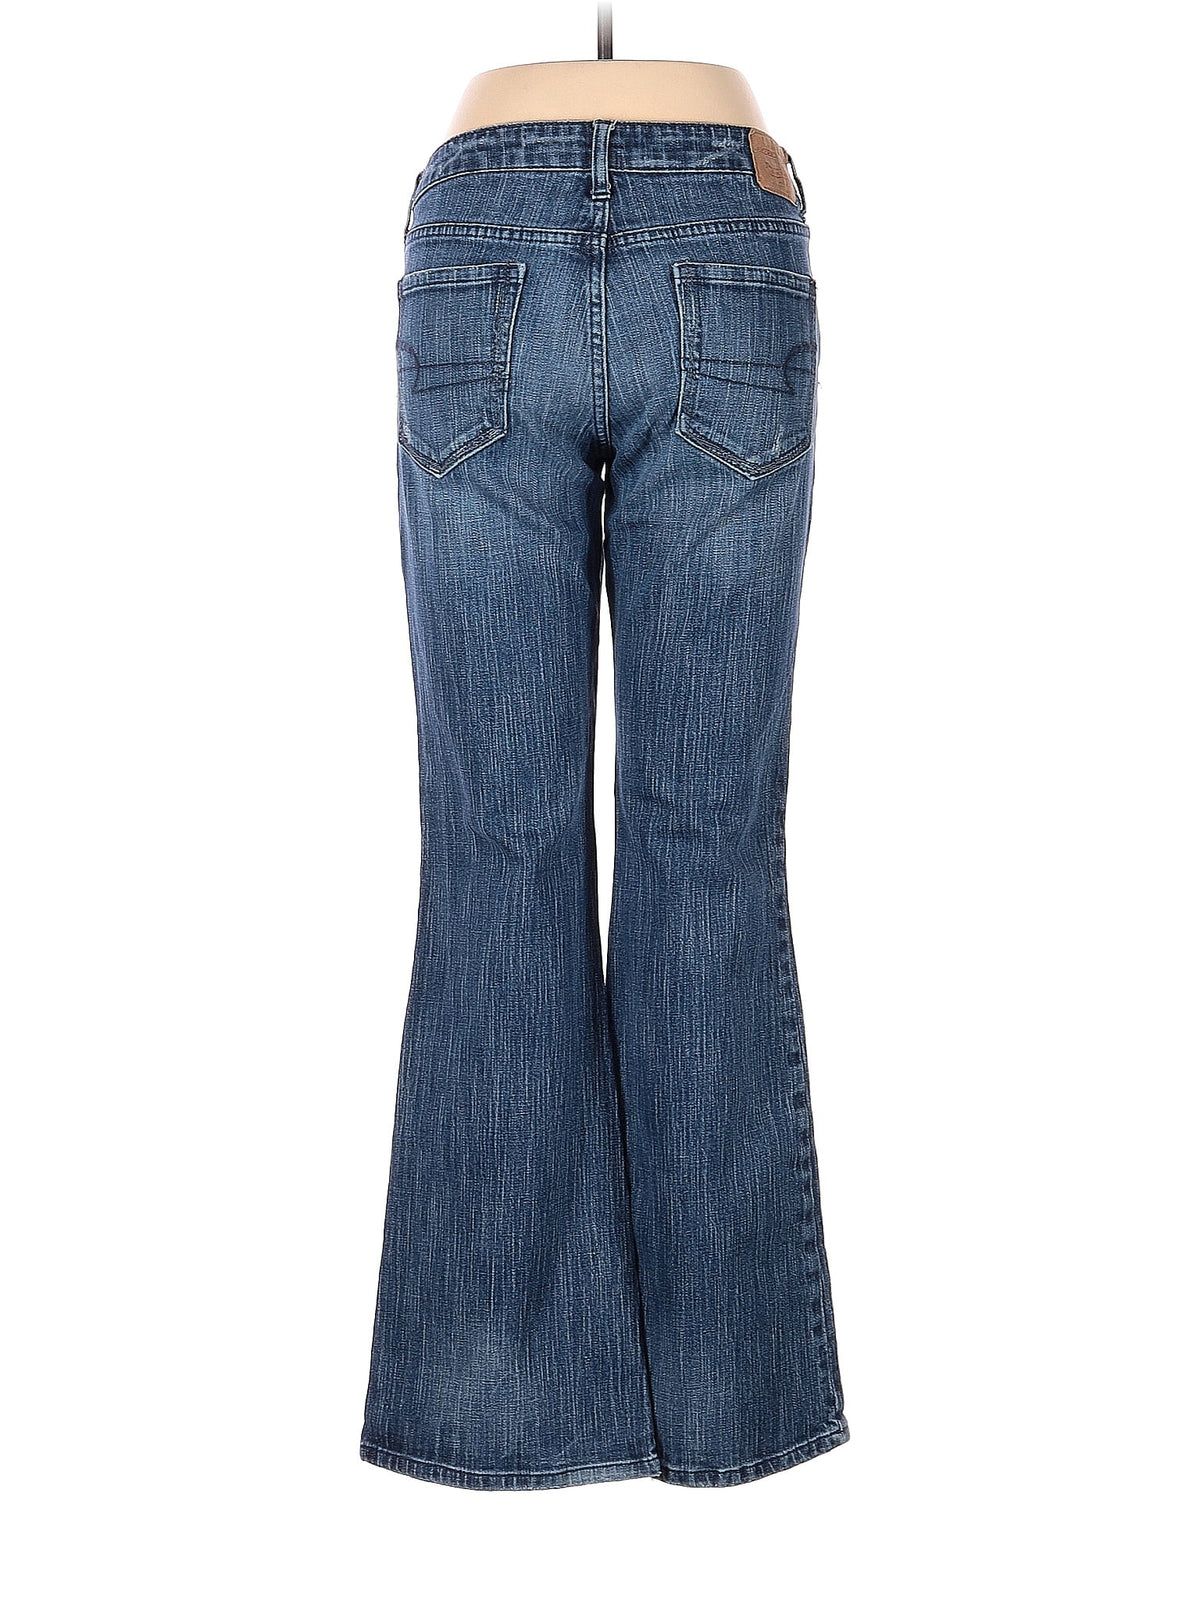 Jeans size - 12